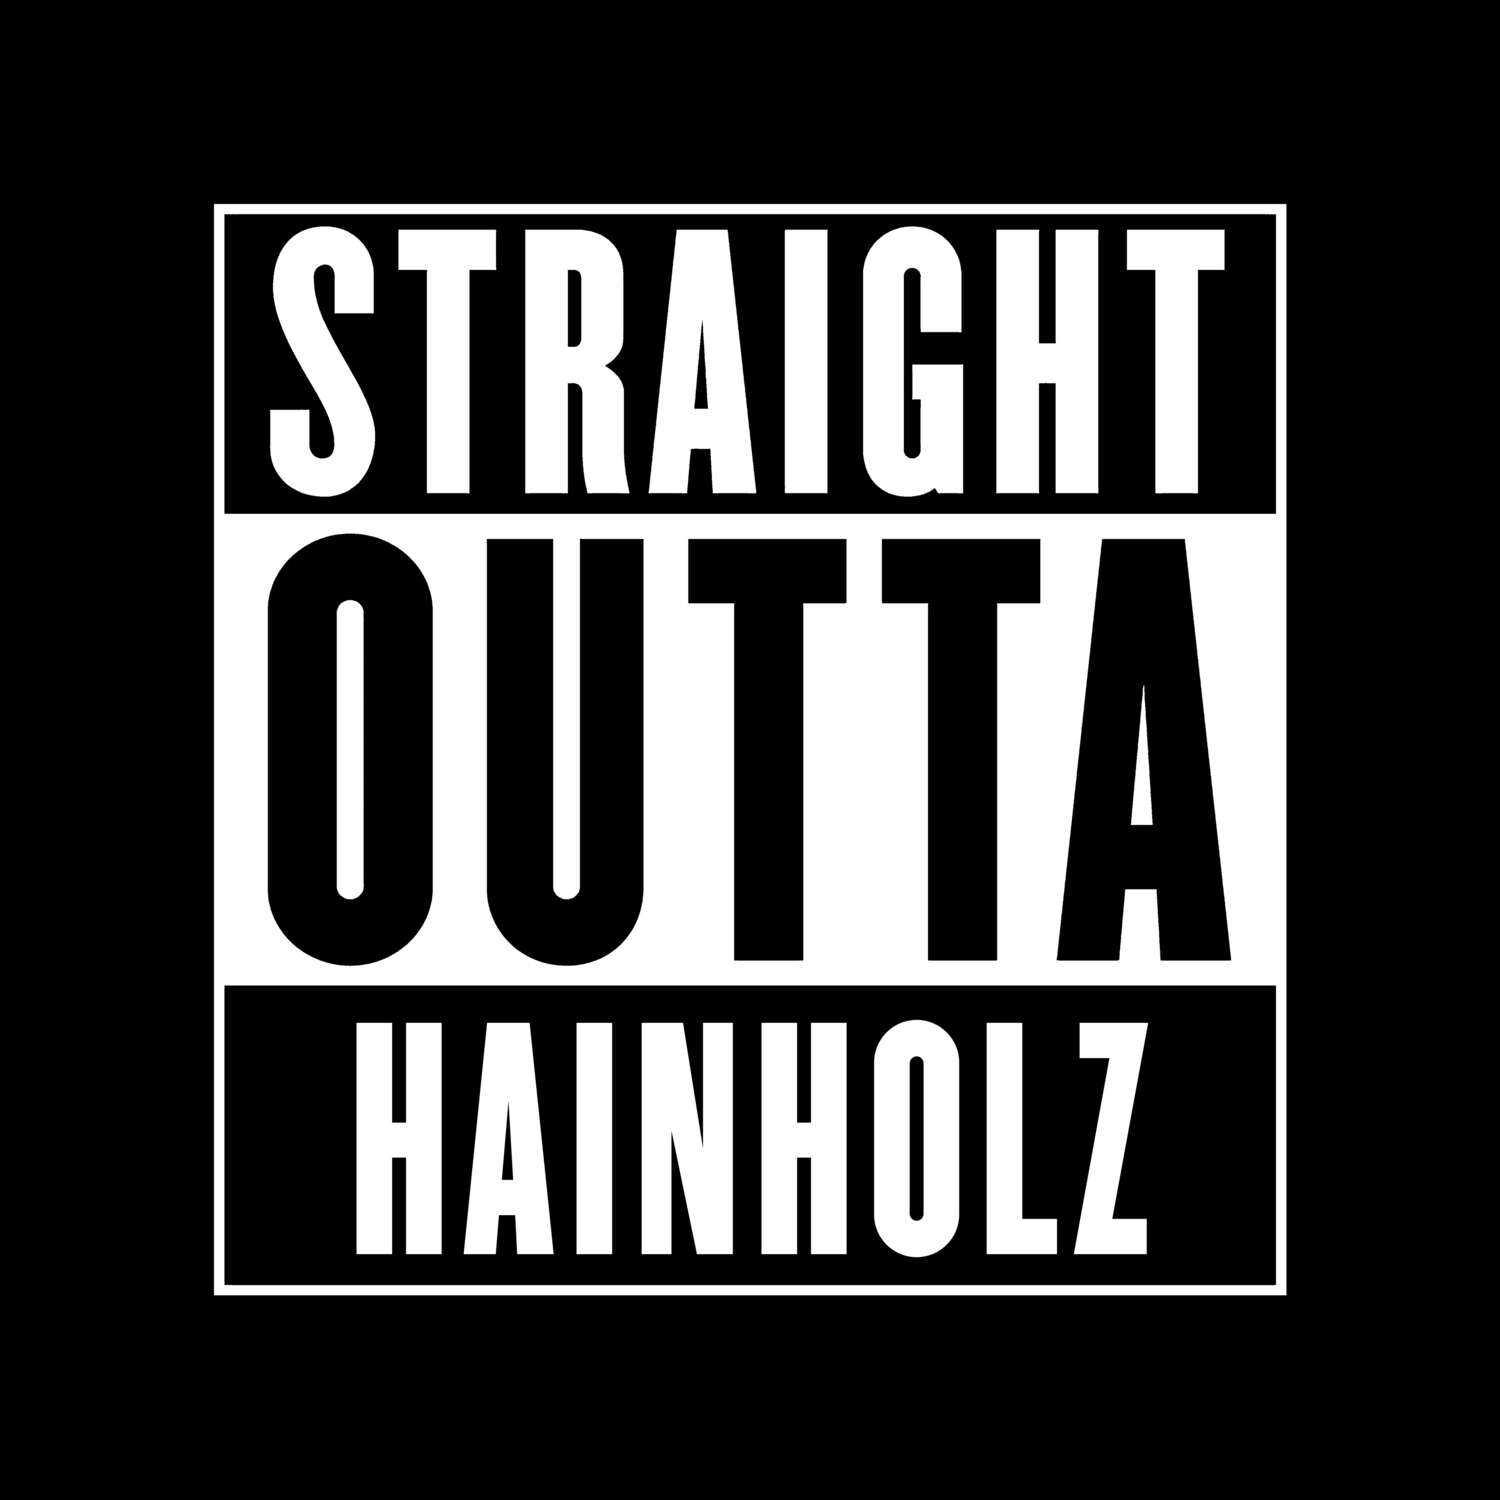 Hainholz T-Shirt »Straight Outta«